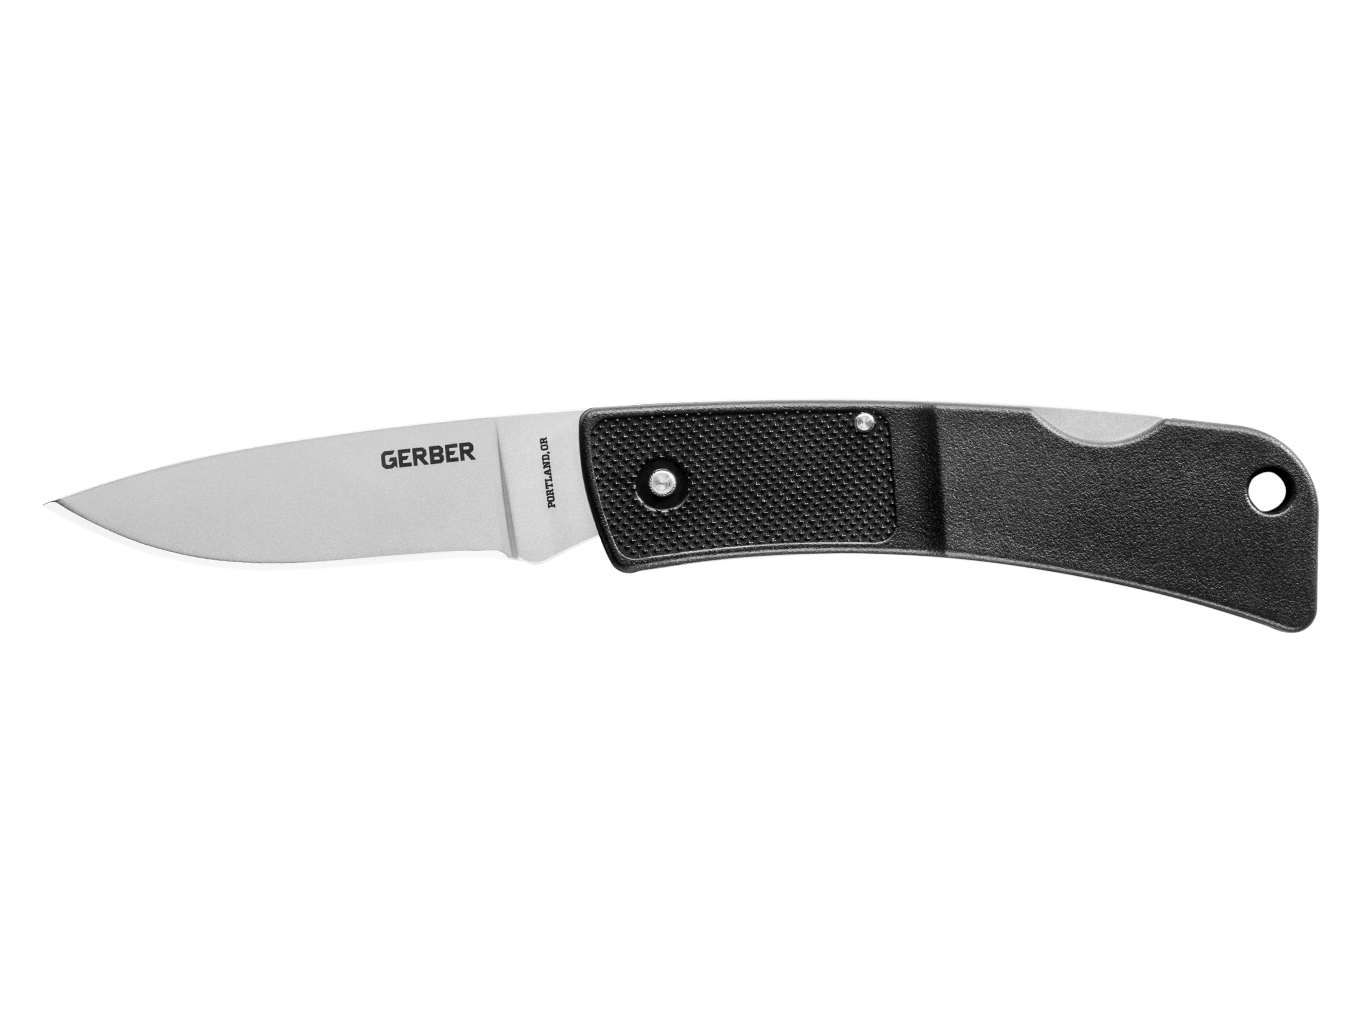 GERBER 22-06009 Pocket Knife, 2.63 in L Blade, Stainless Steel Blade - 1